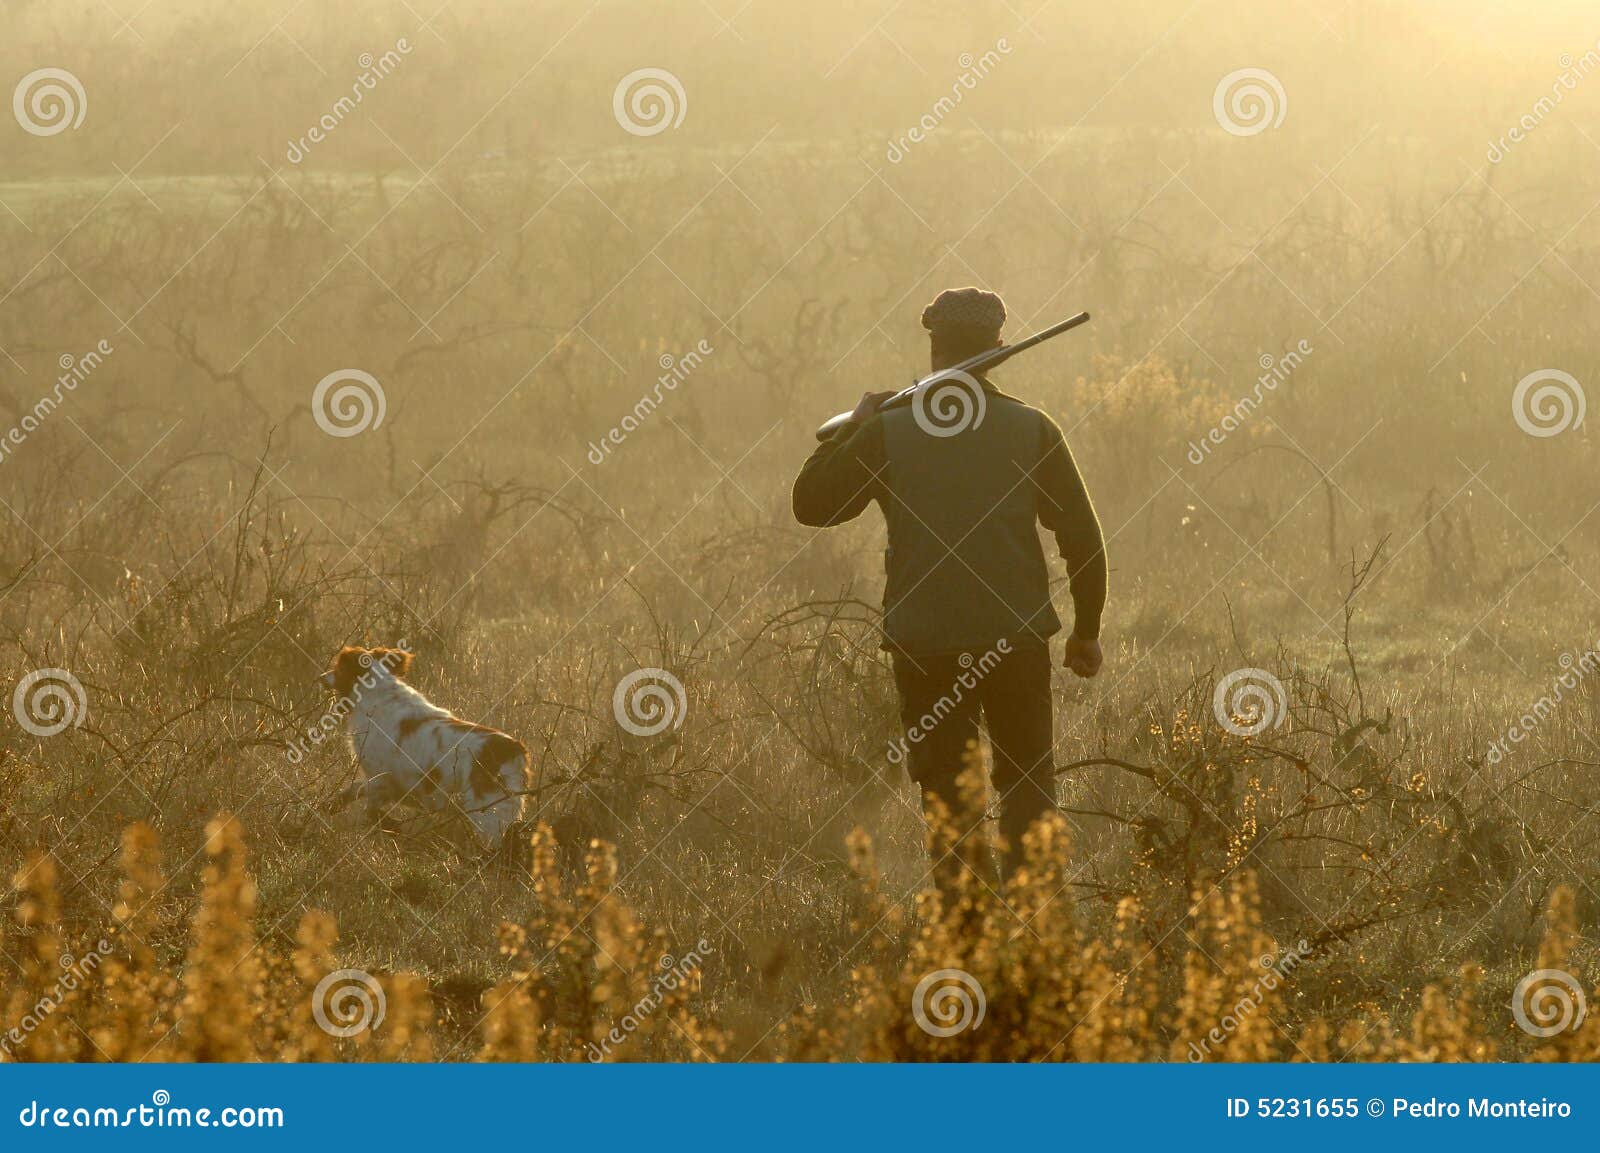 hunter and his dog